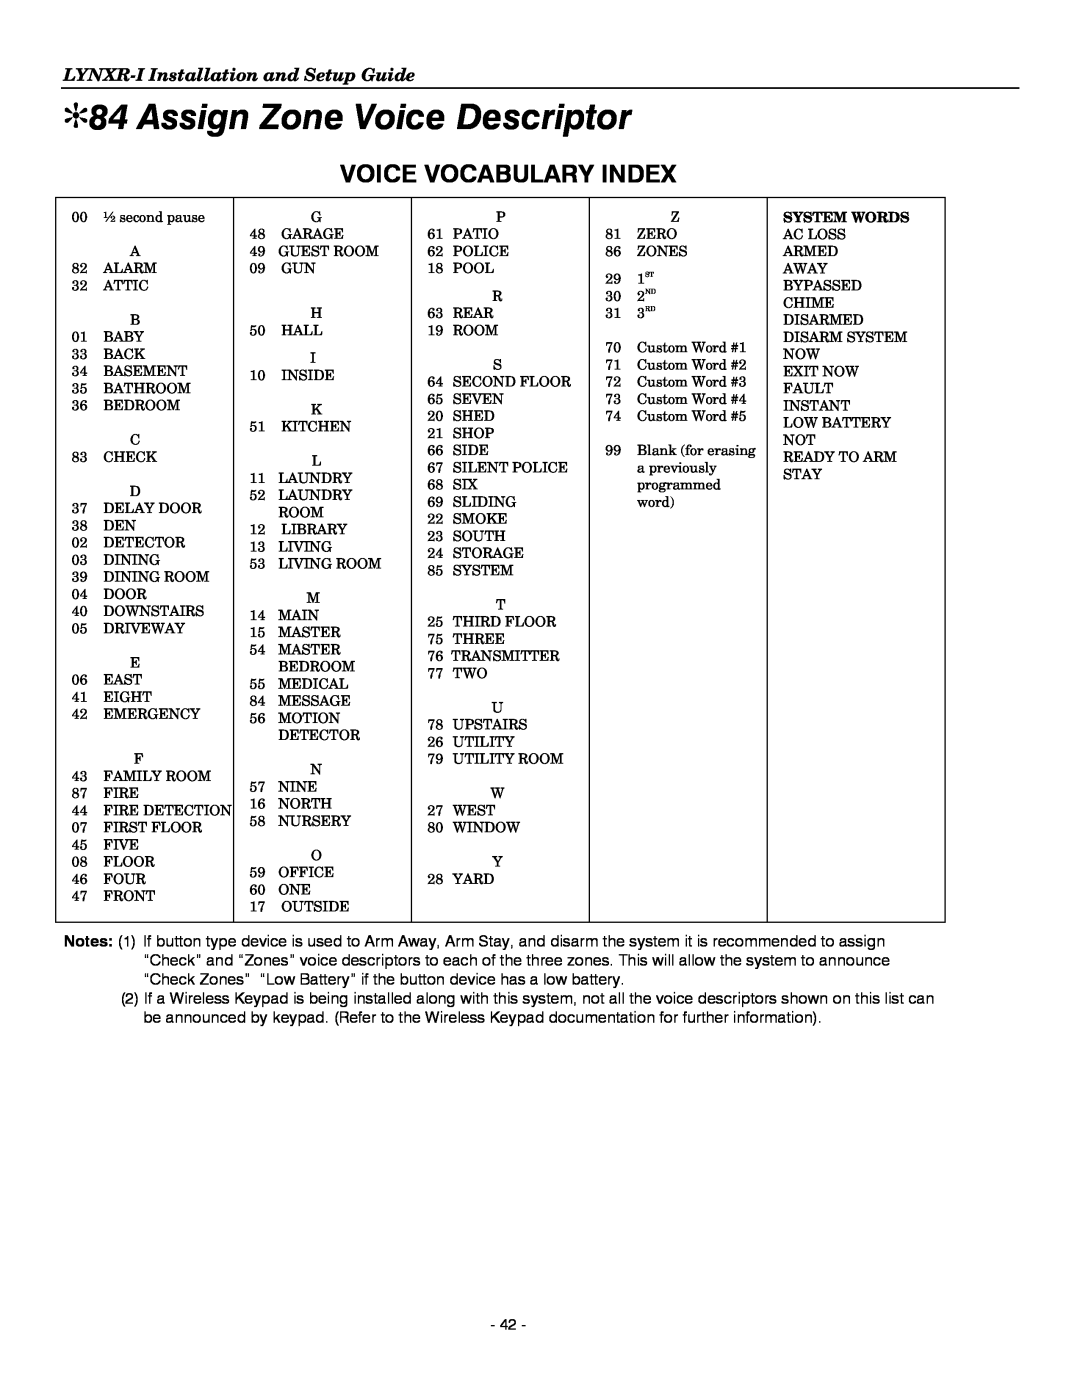 Honeywell K14114 3/06 Rev.B Assign Zone Voice Descriptor, Voice Vocabulary Index, LYNXR-IInstallation and Setup Guide 